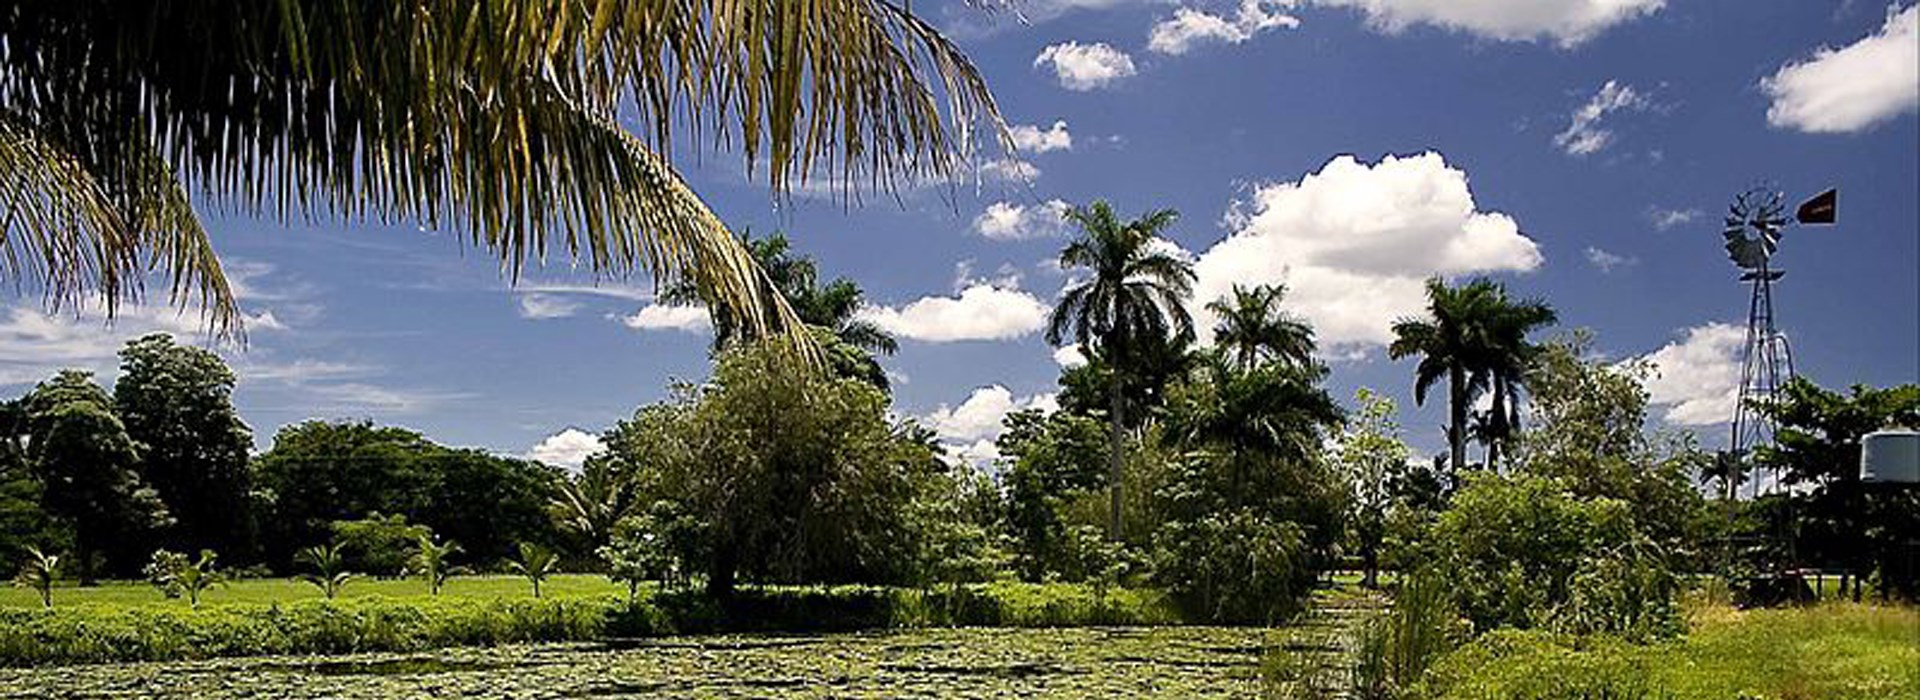 Visiter Cienaga de Zapata - Cuba